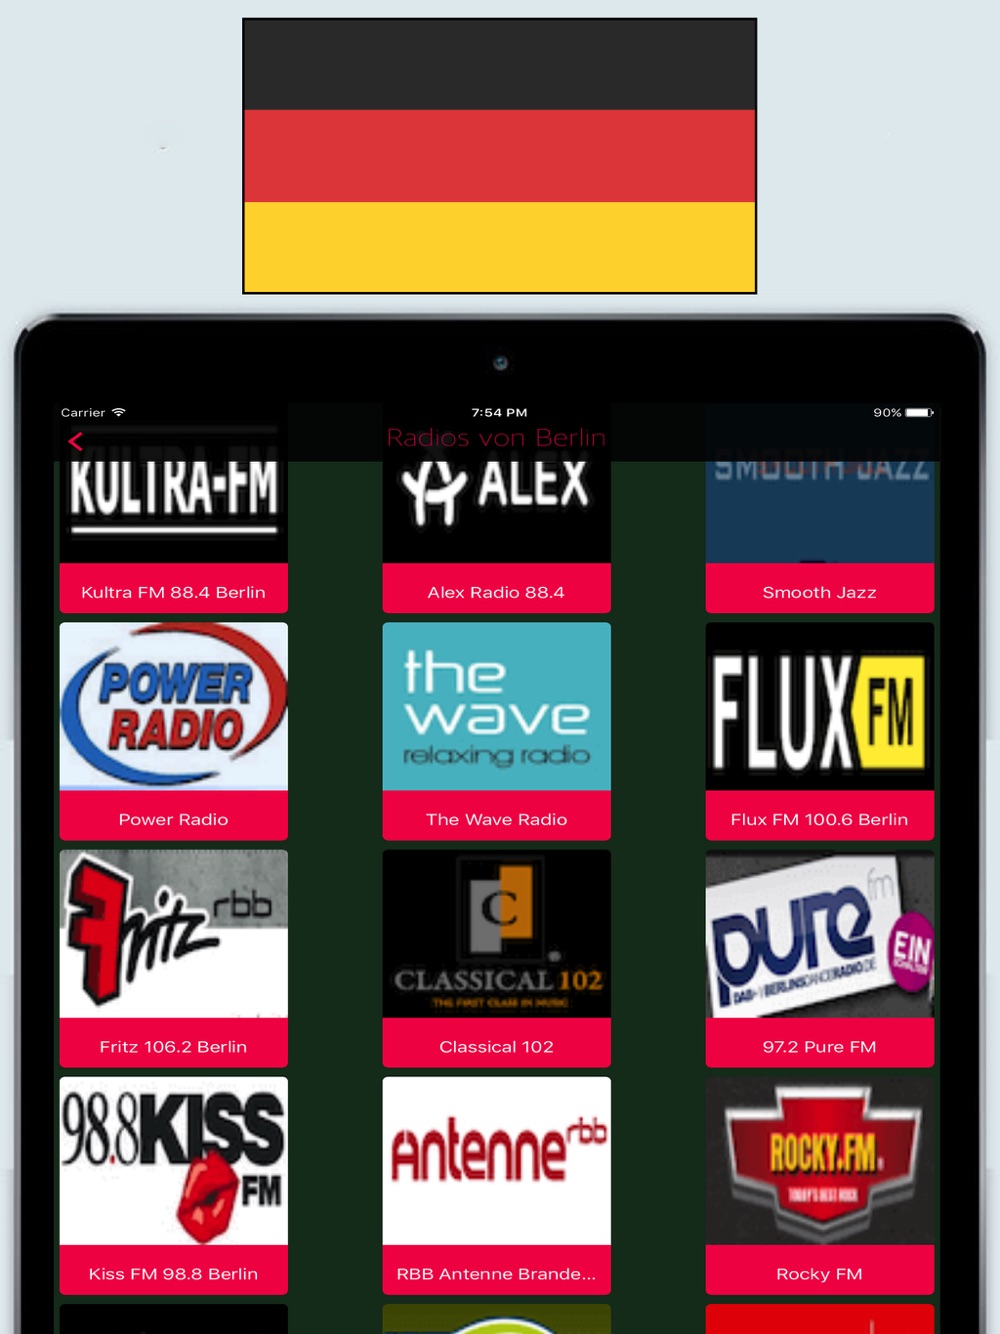 Radio Deutschland FM / Radiosender Online Webradio Free Download App for  iPhone - STEPrimo.com